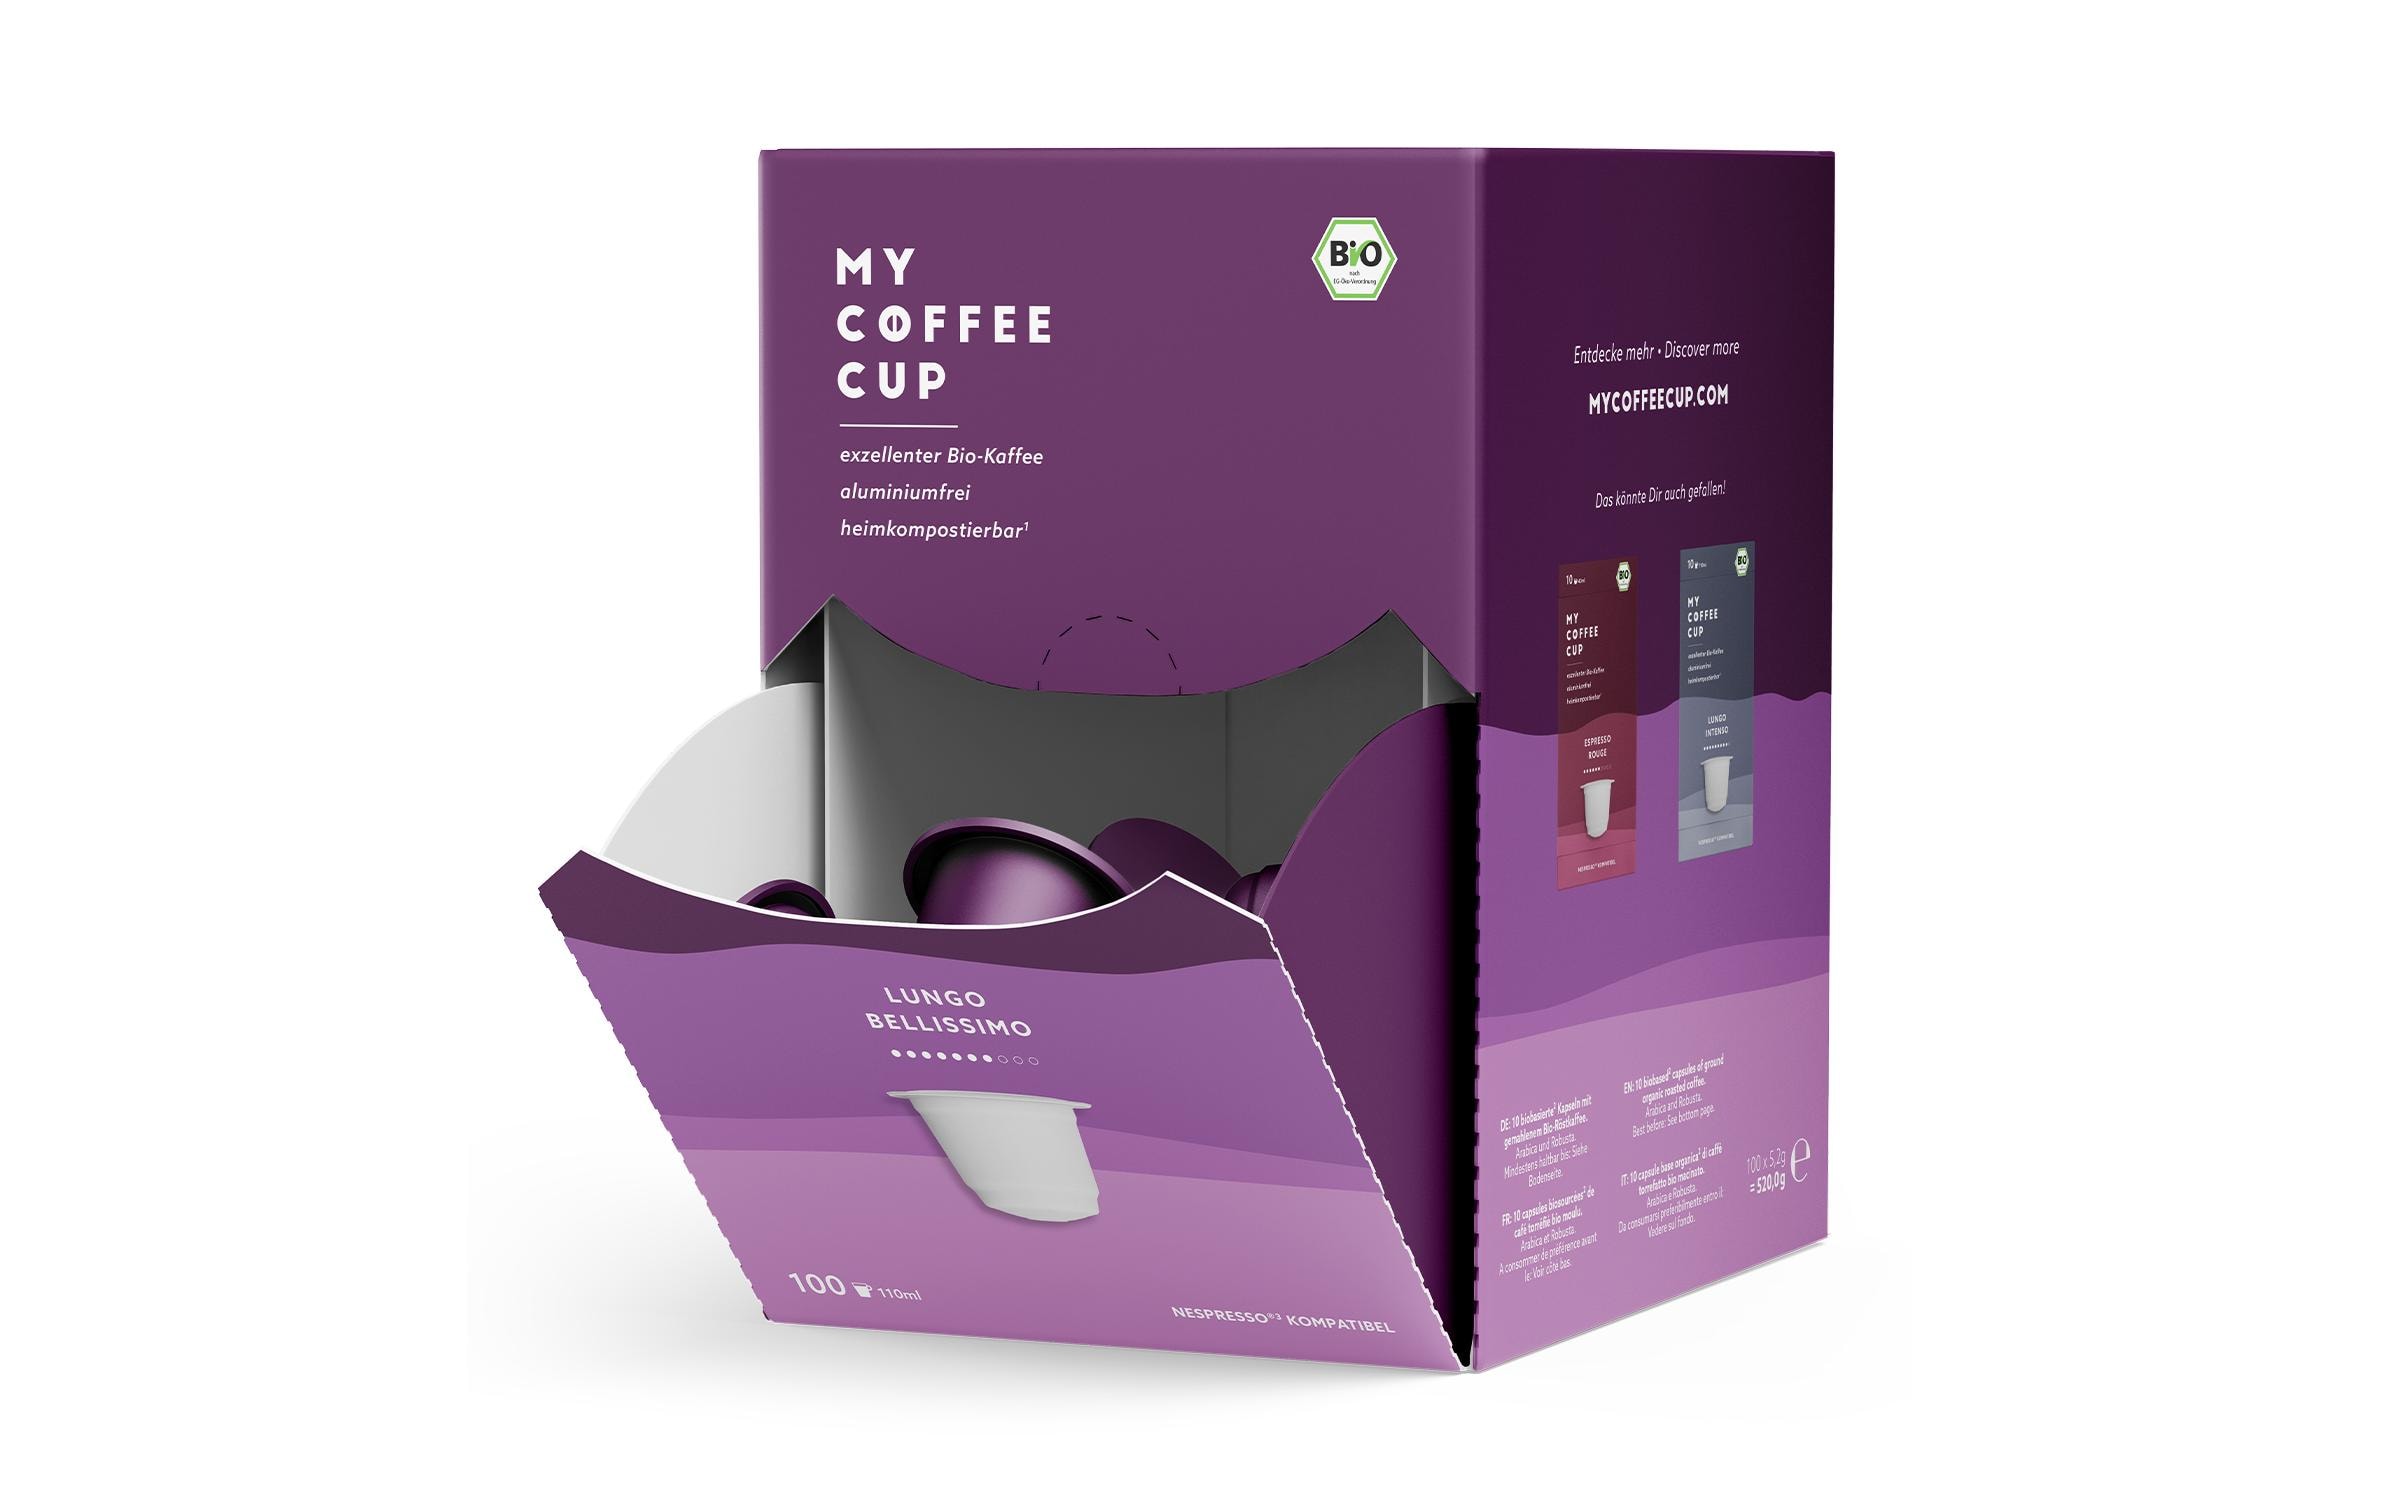 My-CoffeeCup Kaffeekapseln Mega Box Bio Lungo Bellissimo 100 Stück